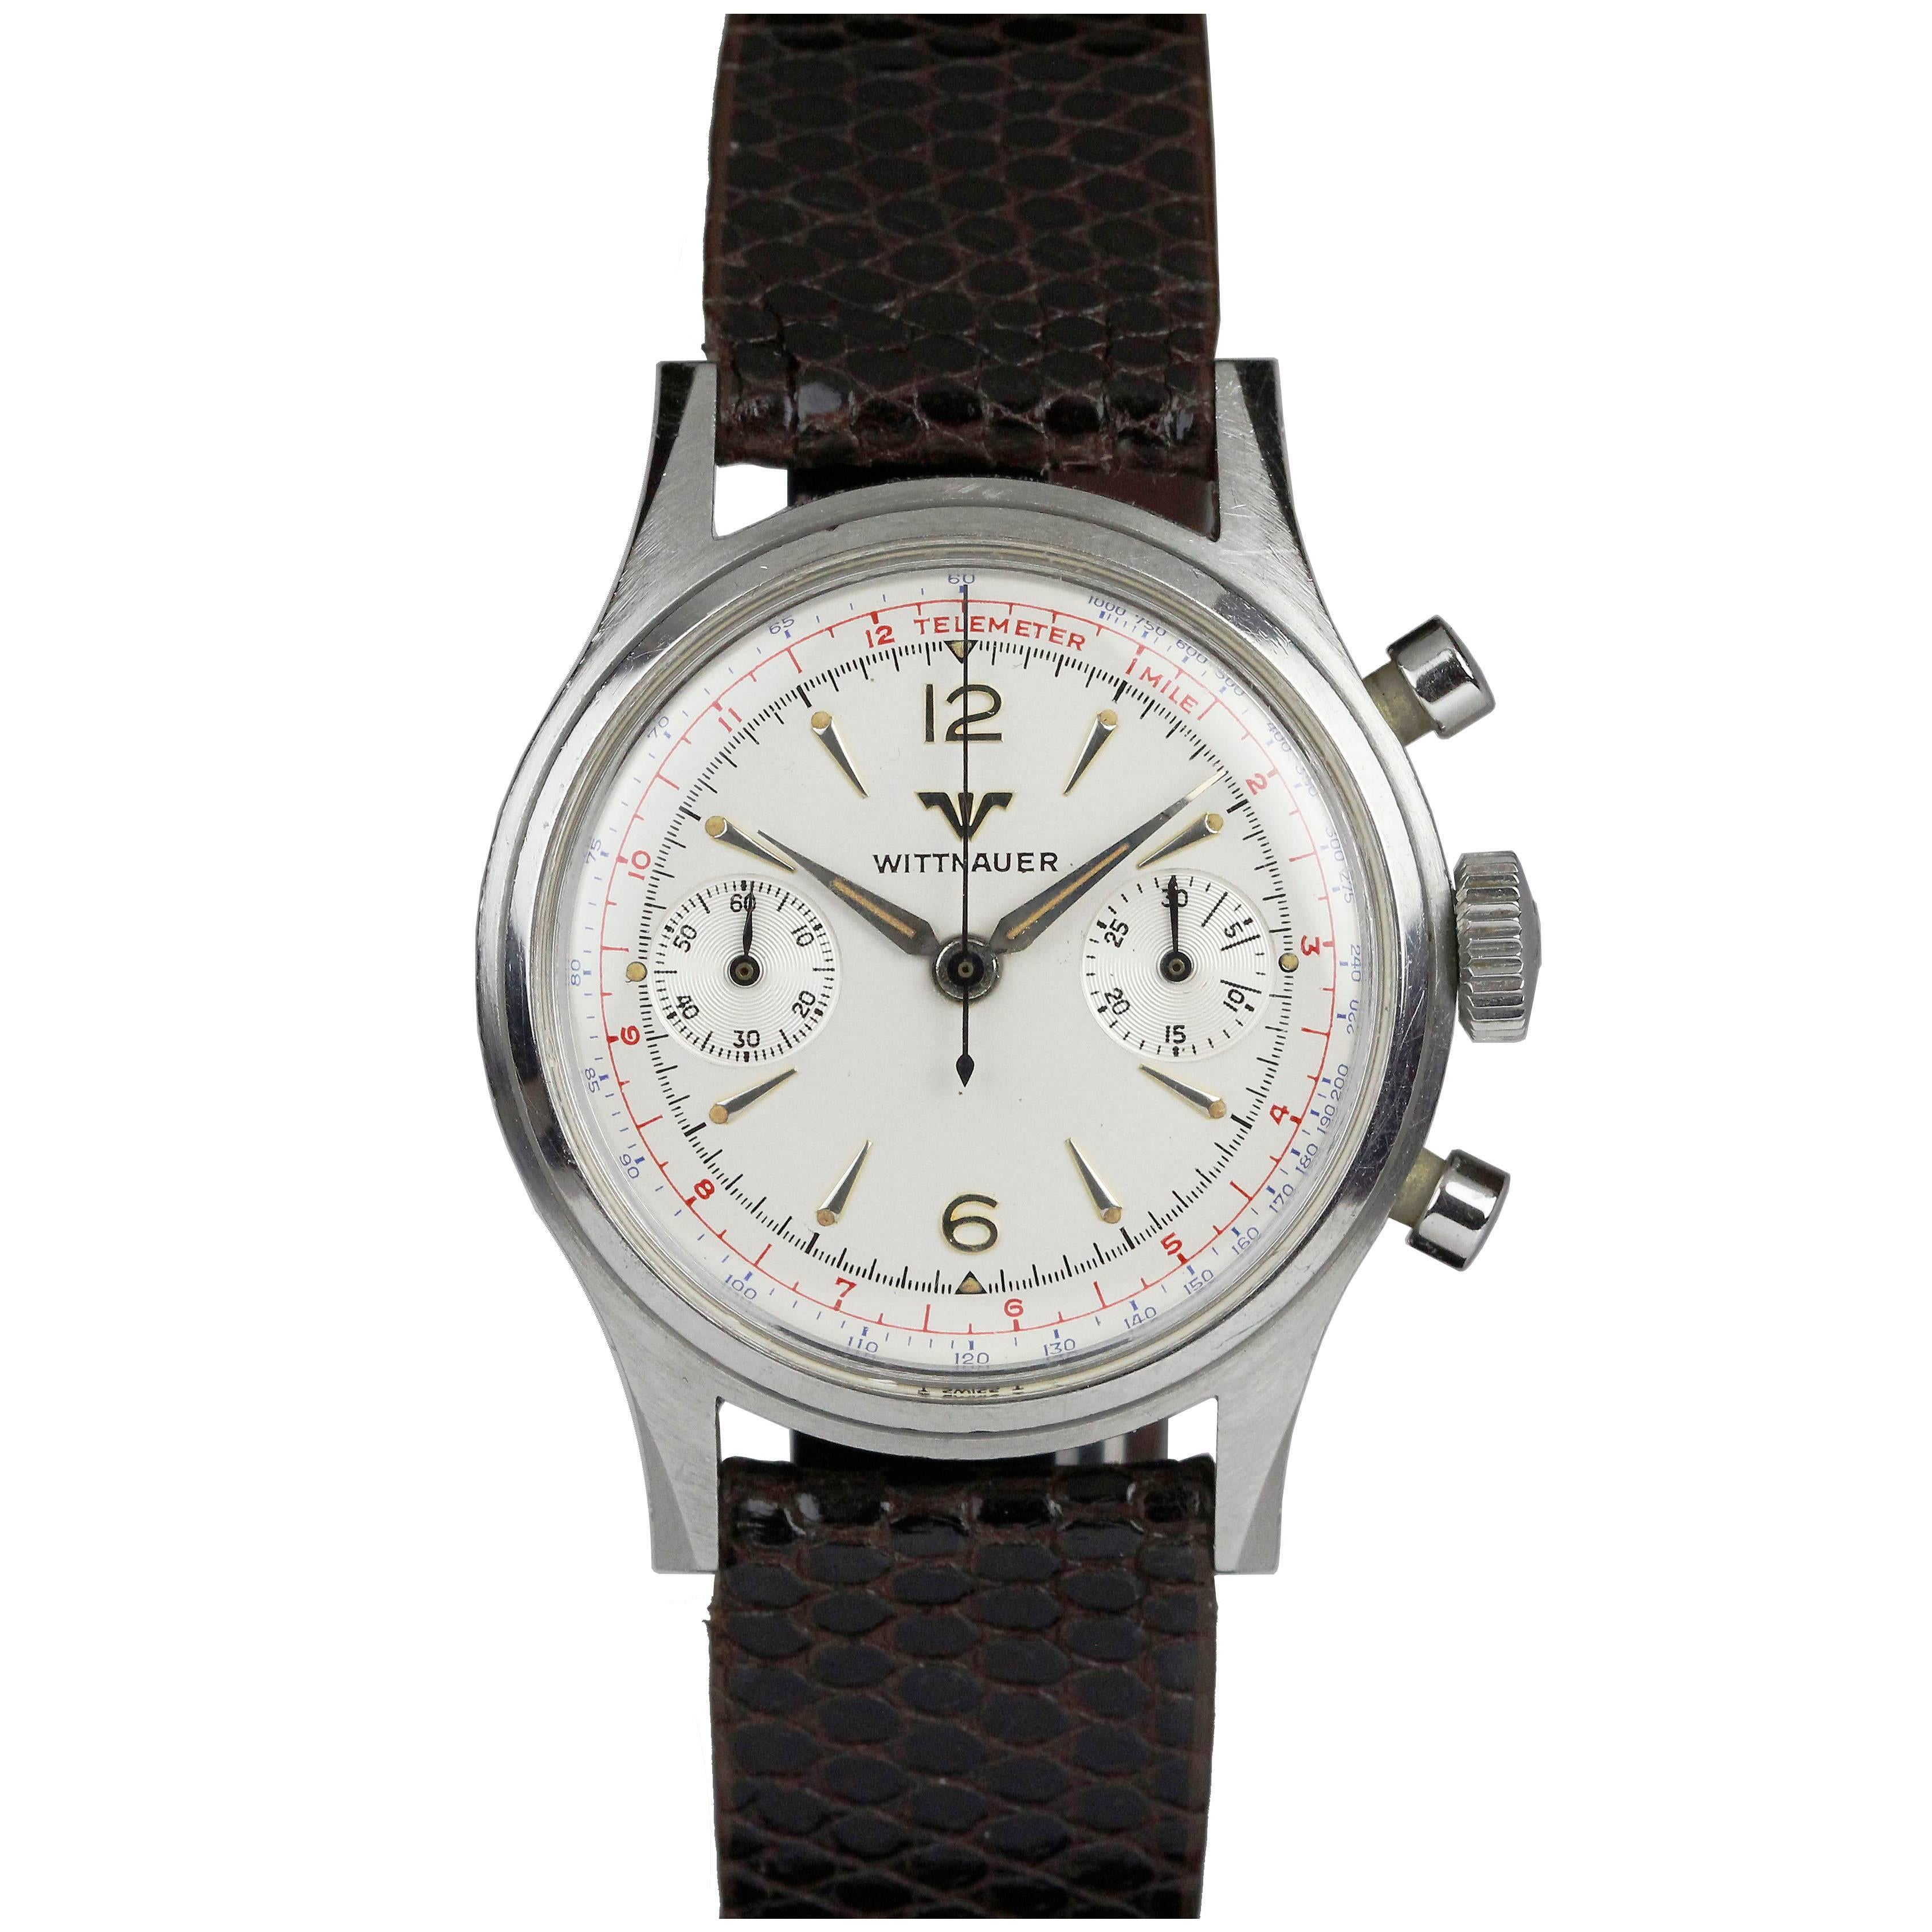 Wittnauer Stainless Steel Chronograph Wristwatch Ref 3256, circa 1960